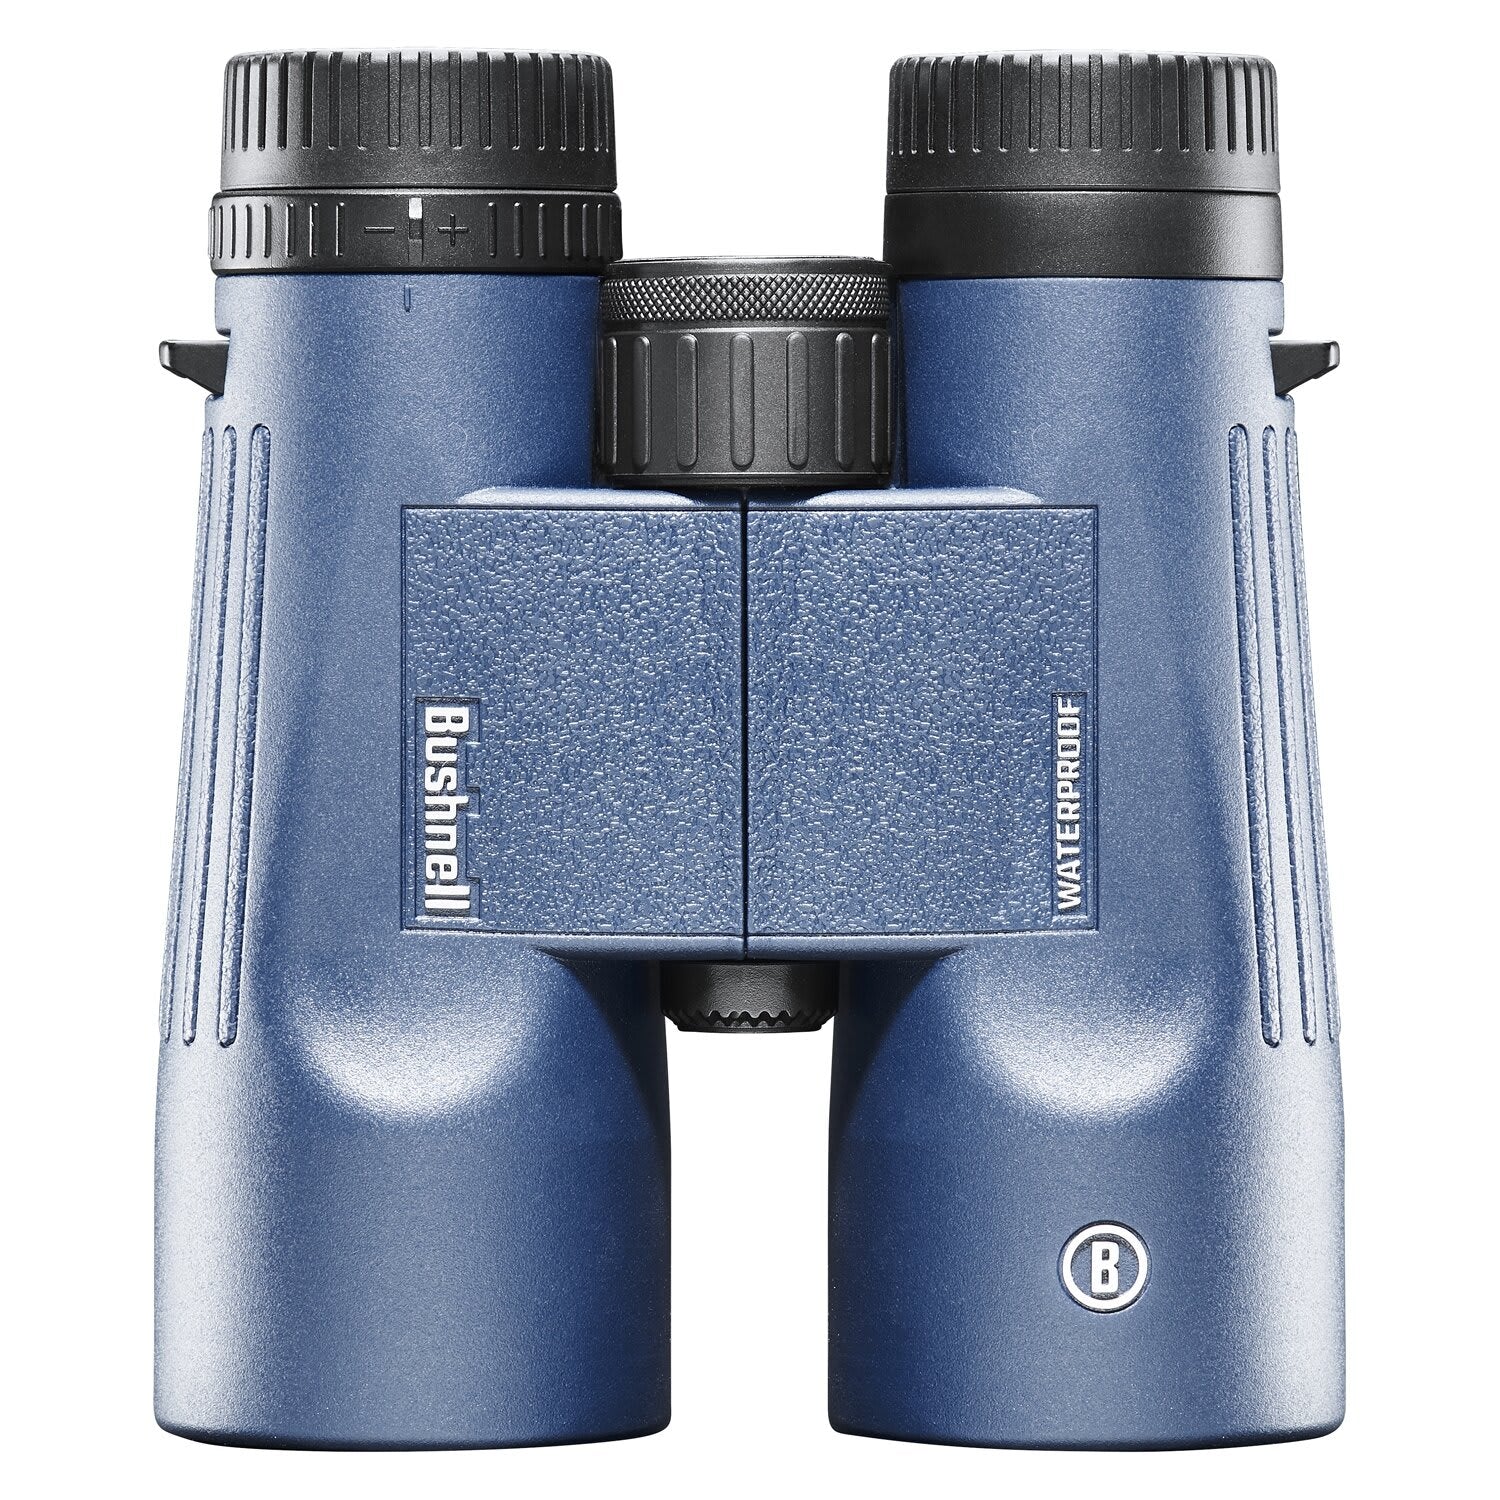 Bushnell H2O 10X42 Waterproof Binocular Camera tek